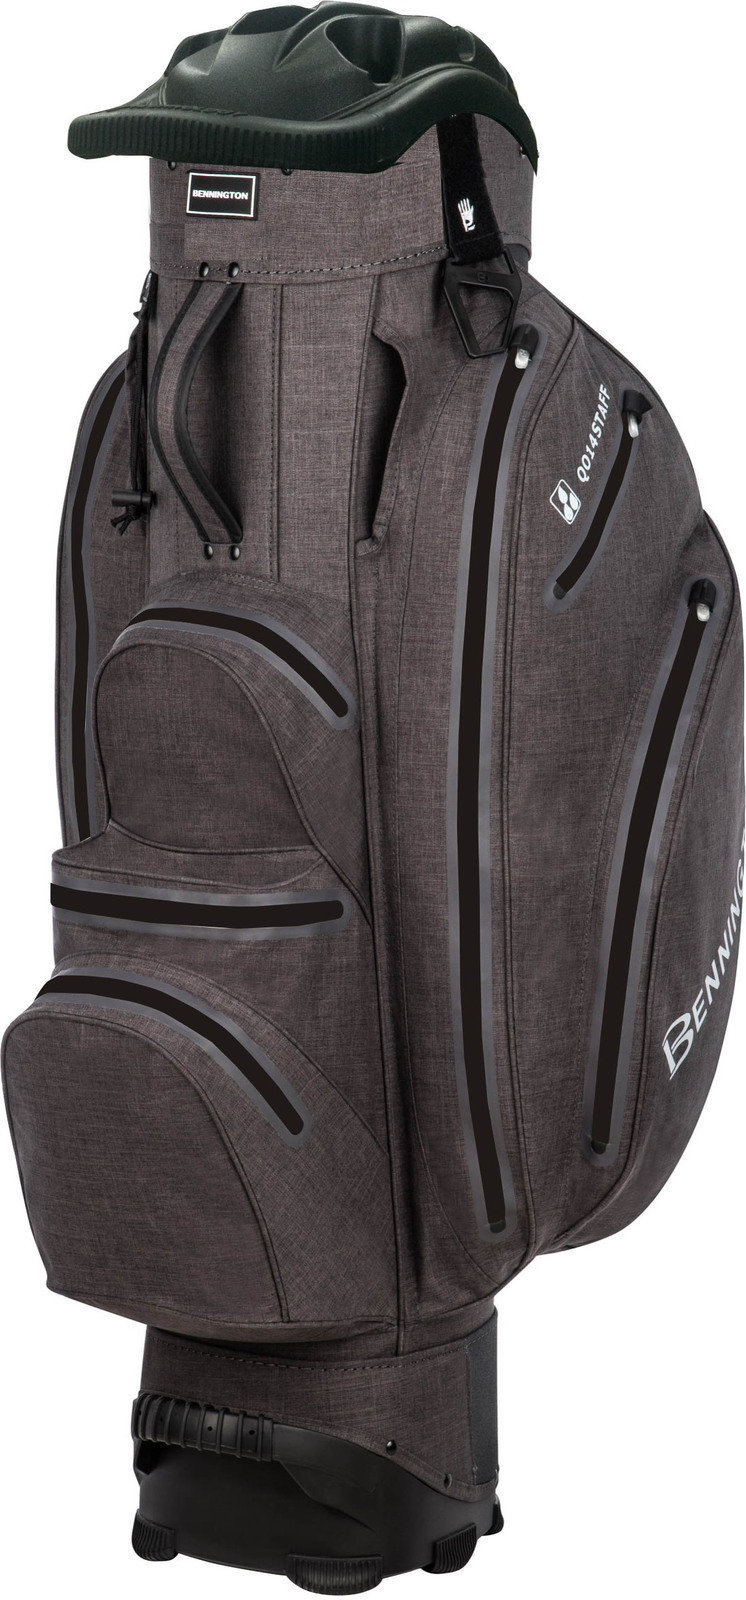 Saco de golfe Bennington QO 14 Premium Waterproof Cart Bag Charcoal